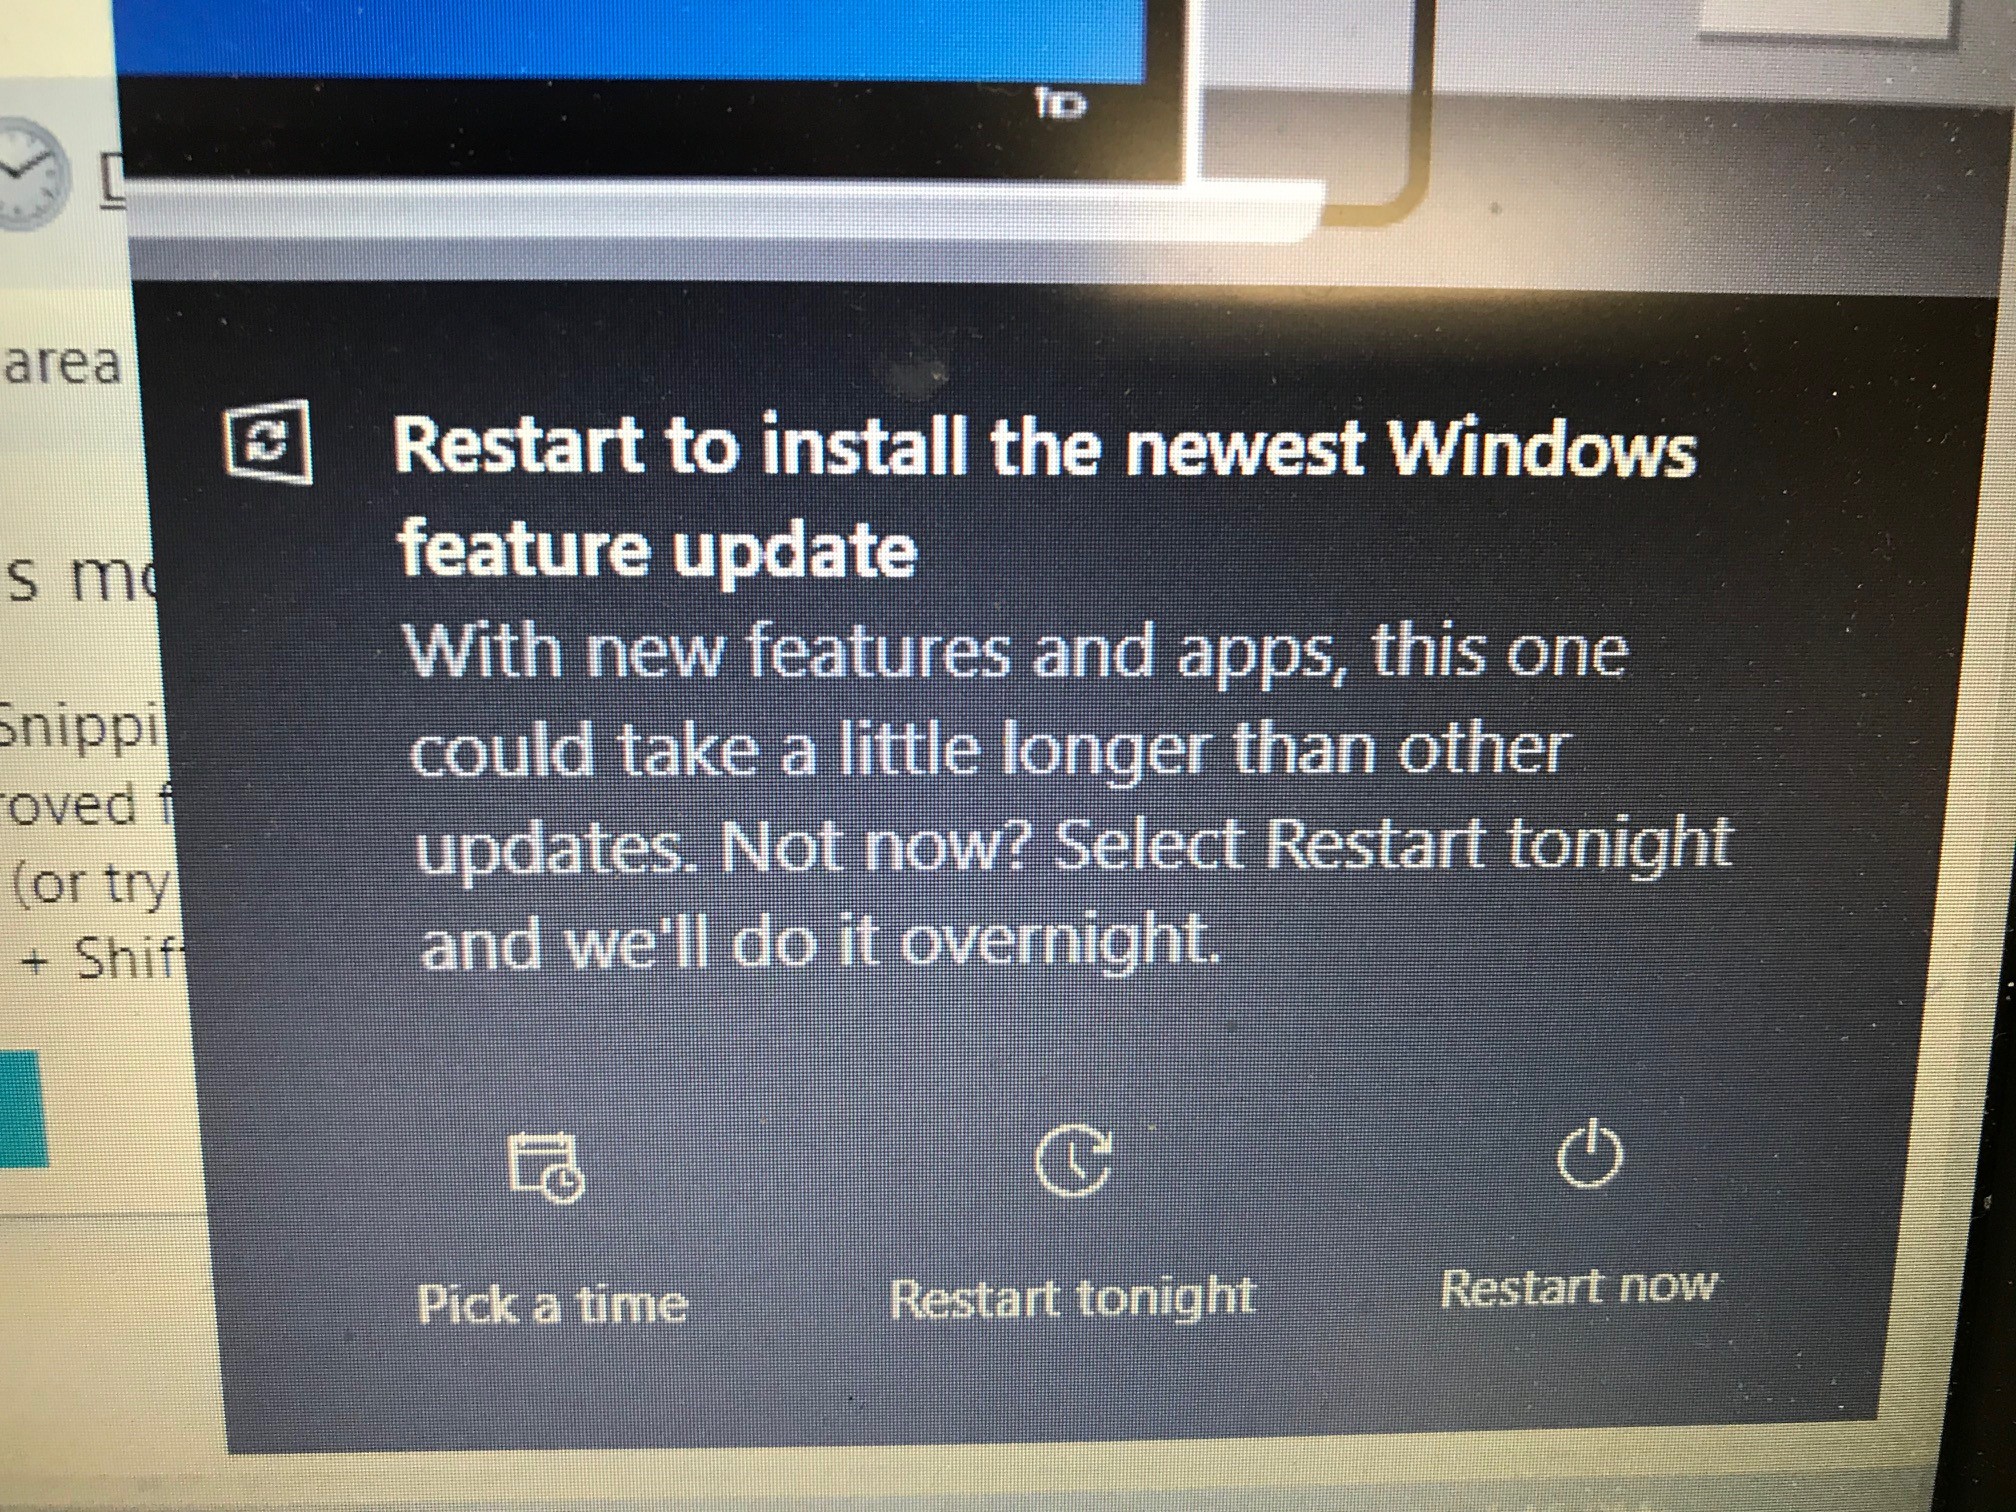 Windows Update Dialog